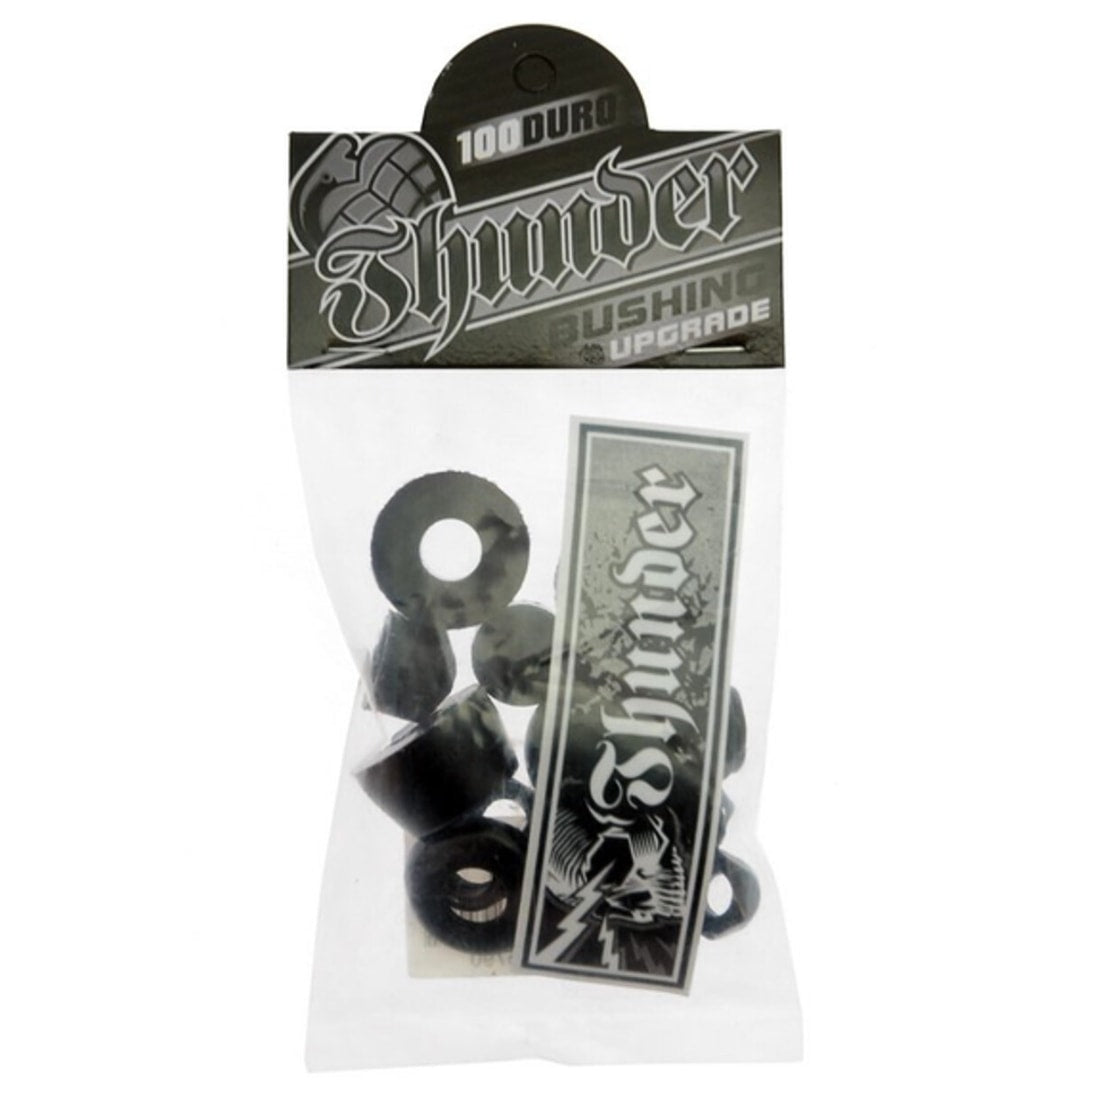 Thunder 100 Duro Rebuild Kit (Bushings/Nuts/Pivot Cup/Washers) - Black - Skateboard Bushings by Thunder